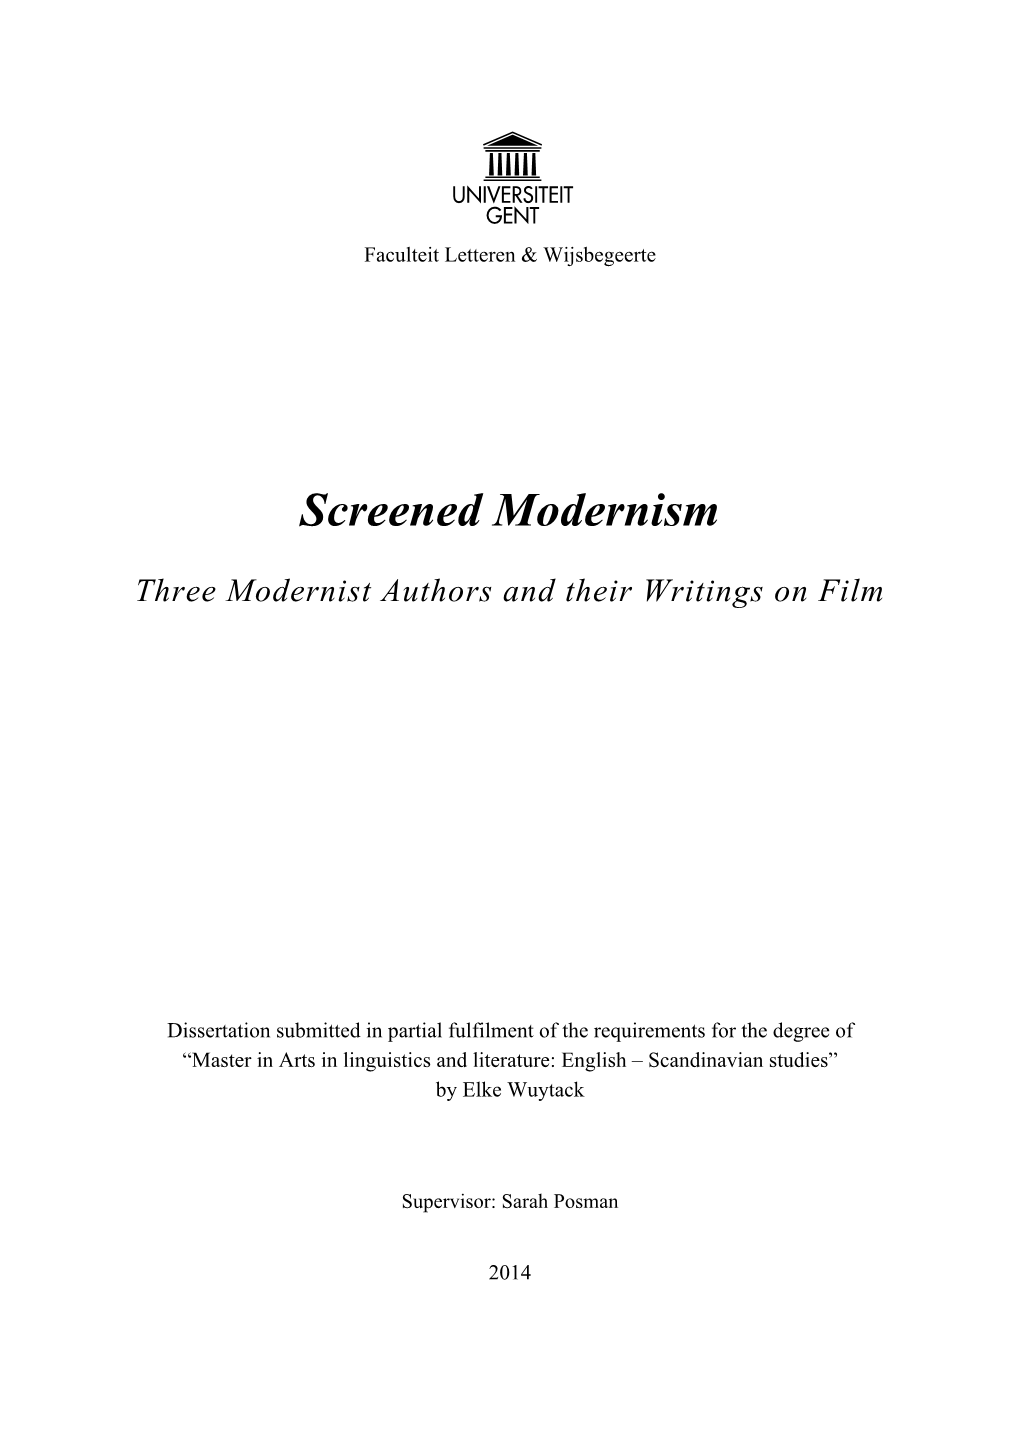 Screened Modernism